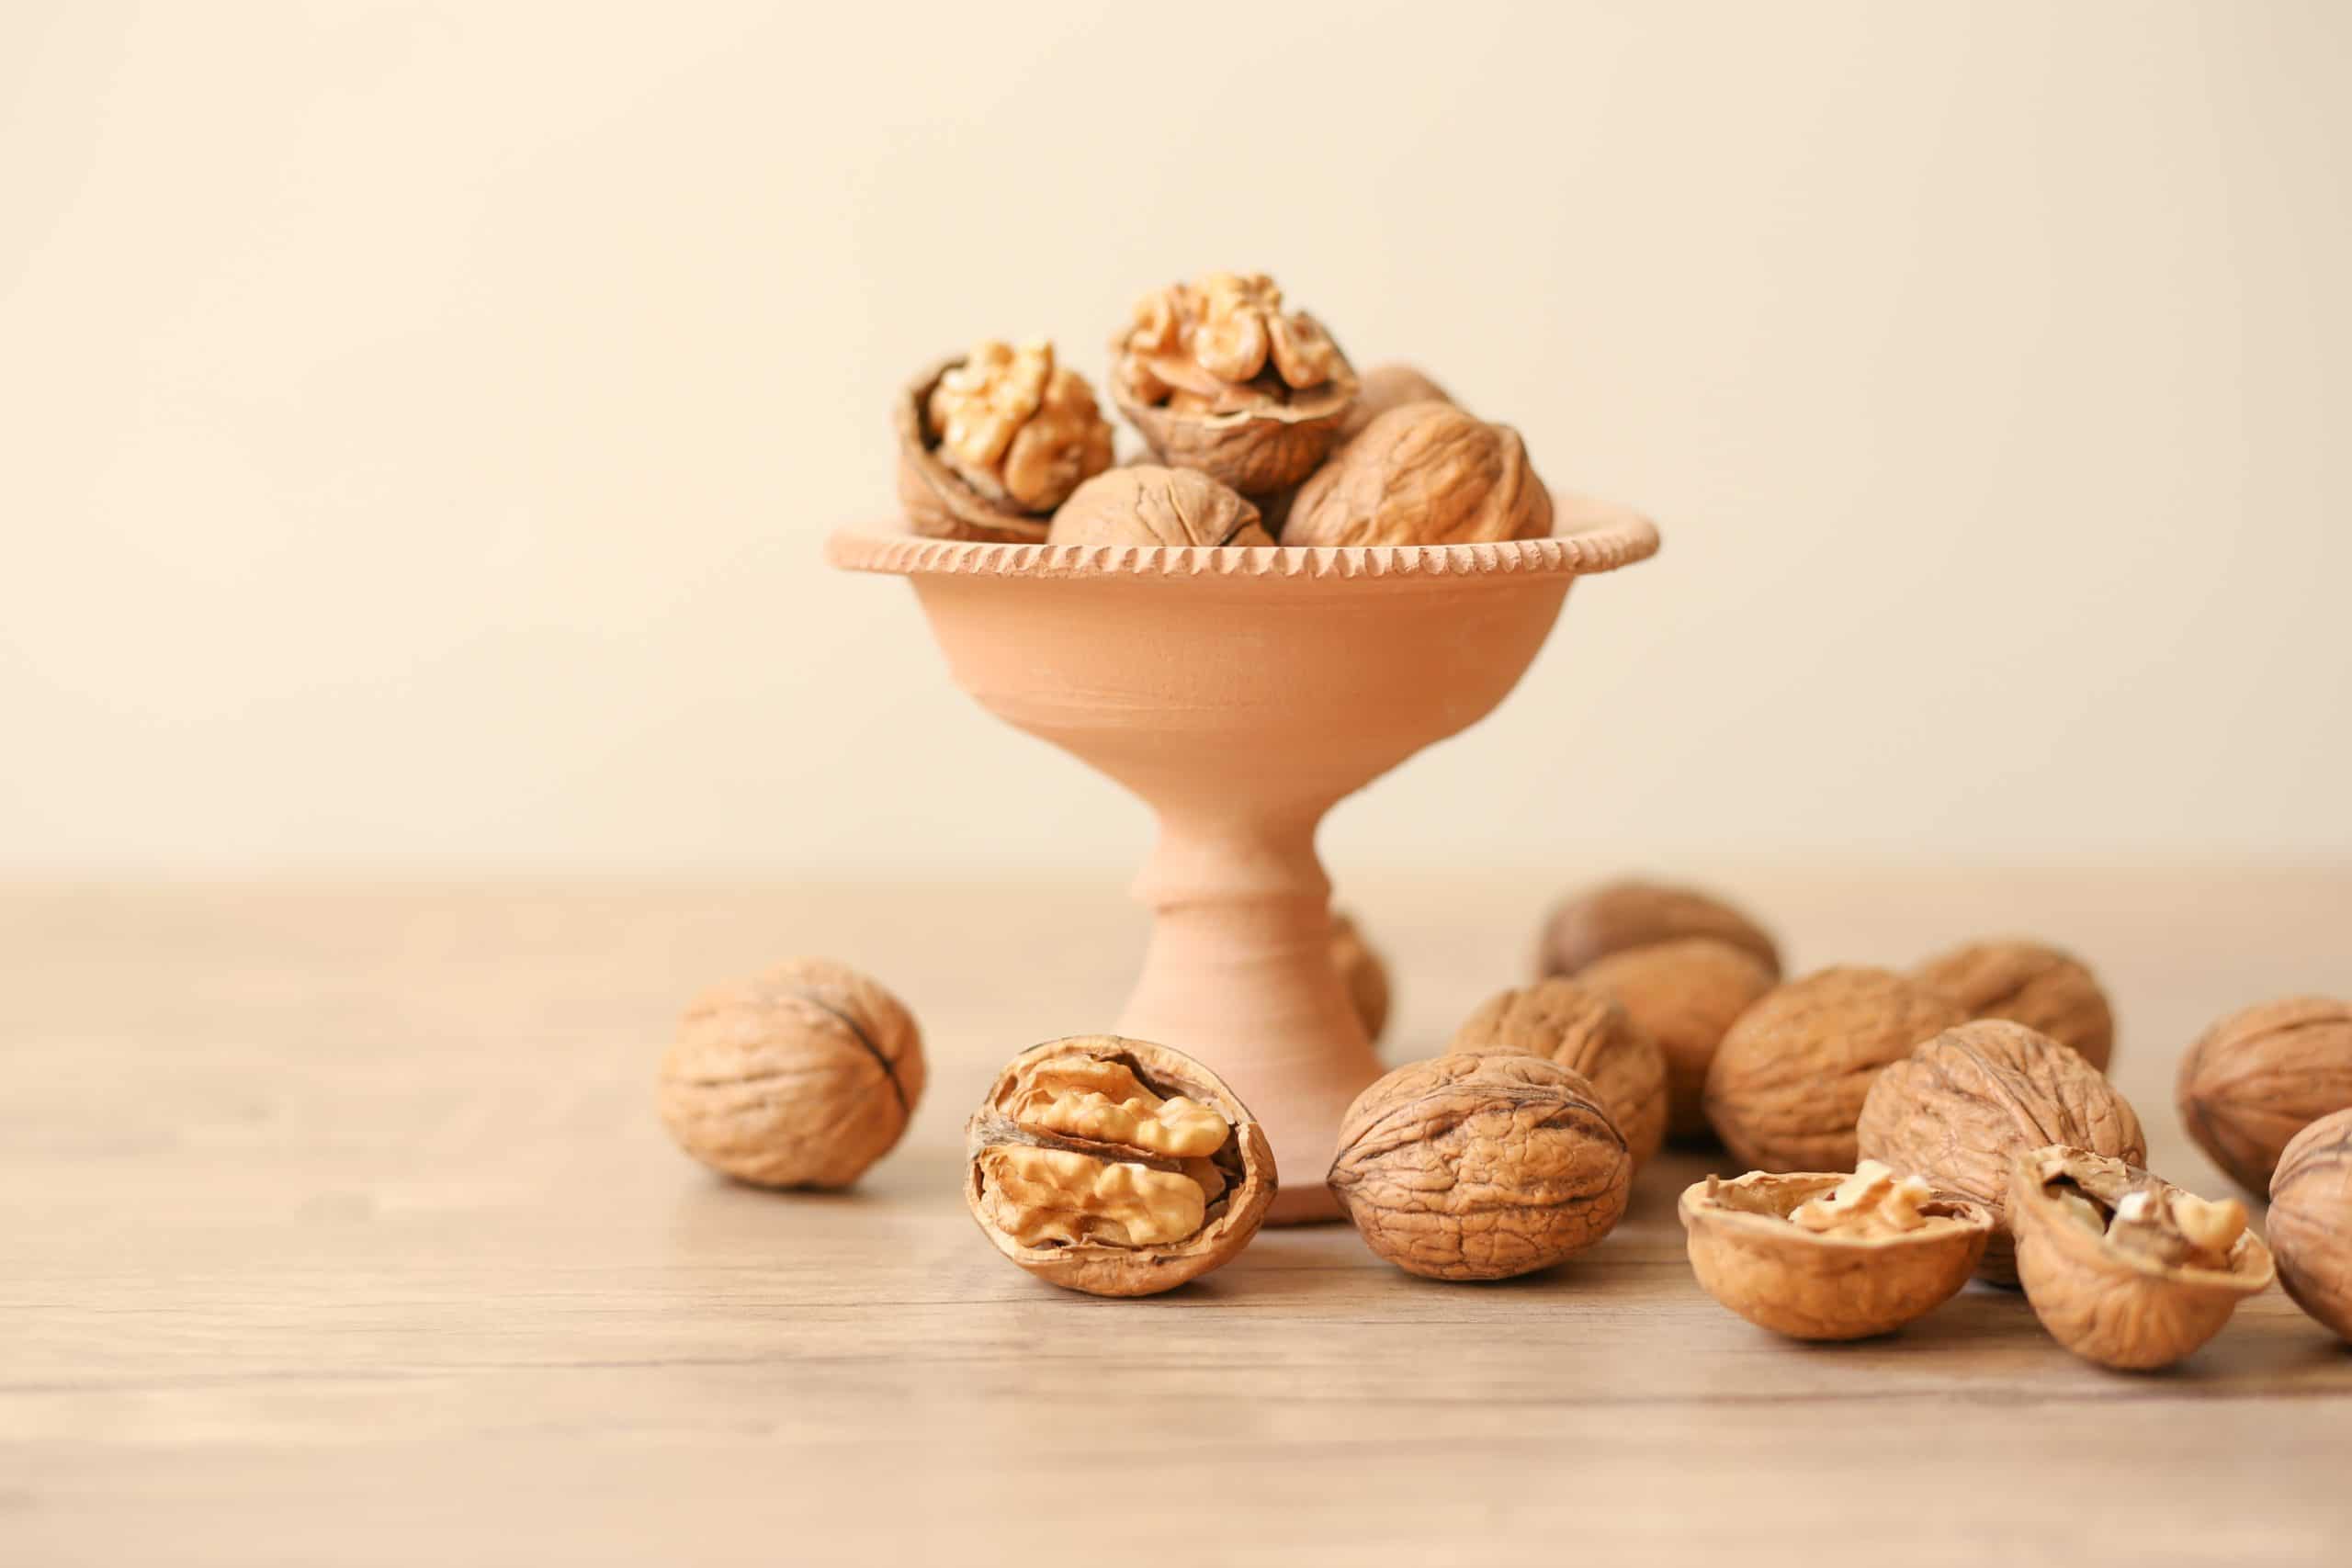 A bowl of healthy walnuts